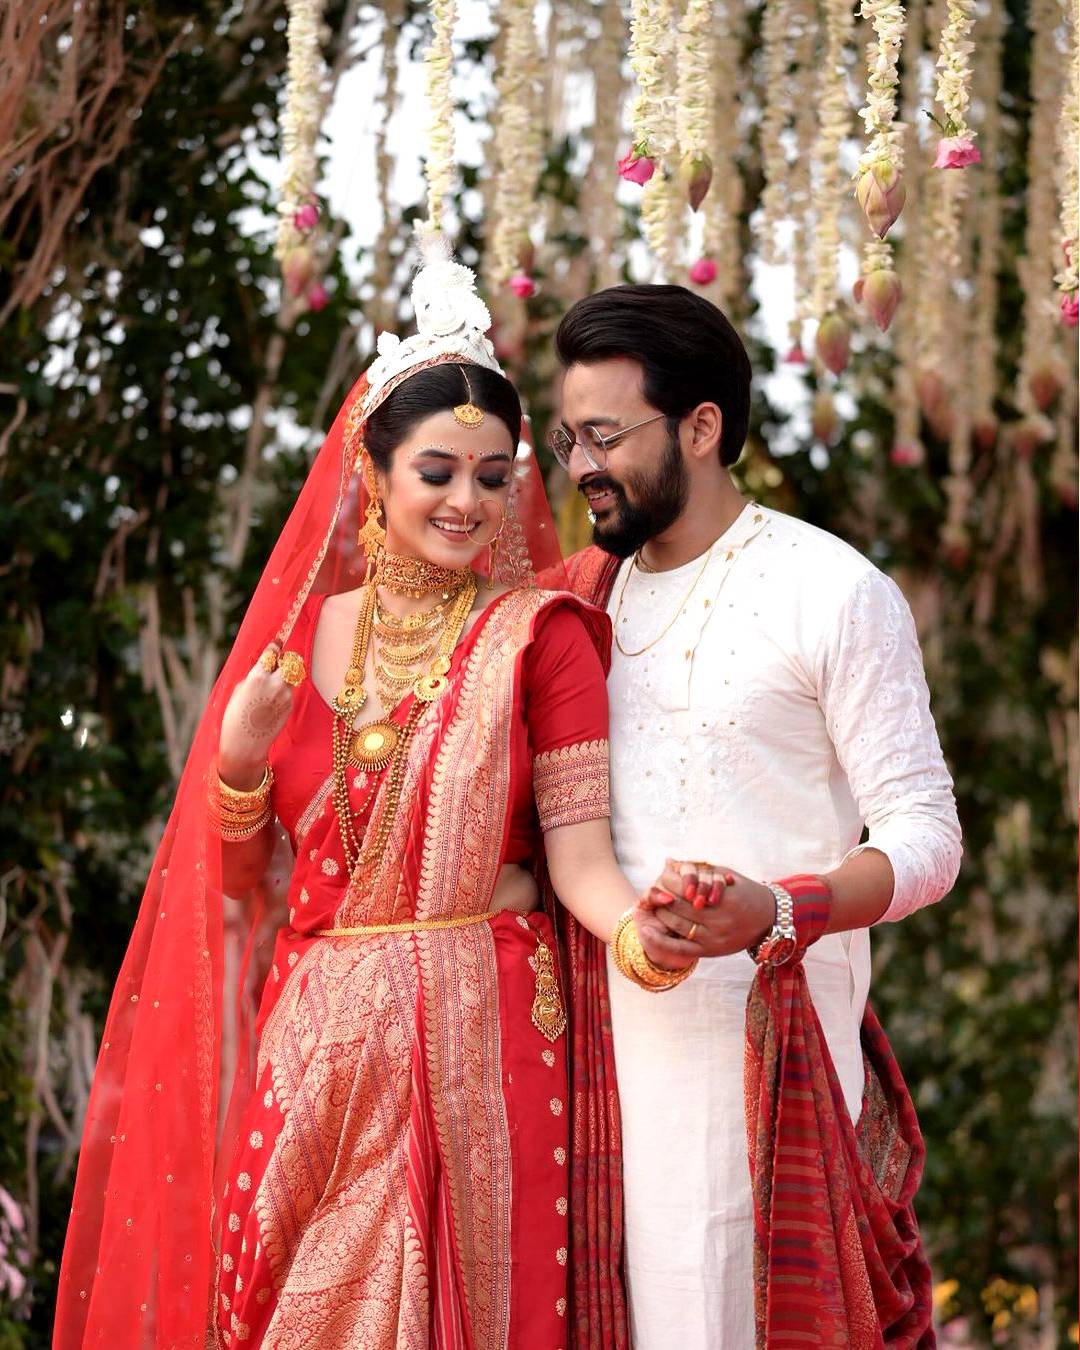 Saurav Das Darshana Banik wedding pictures 